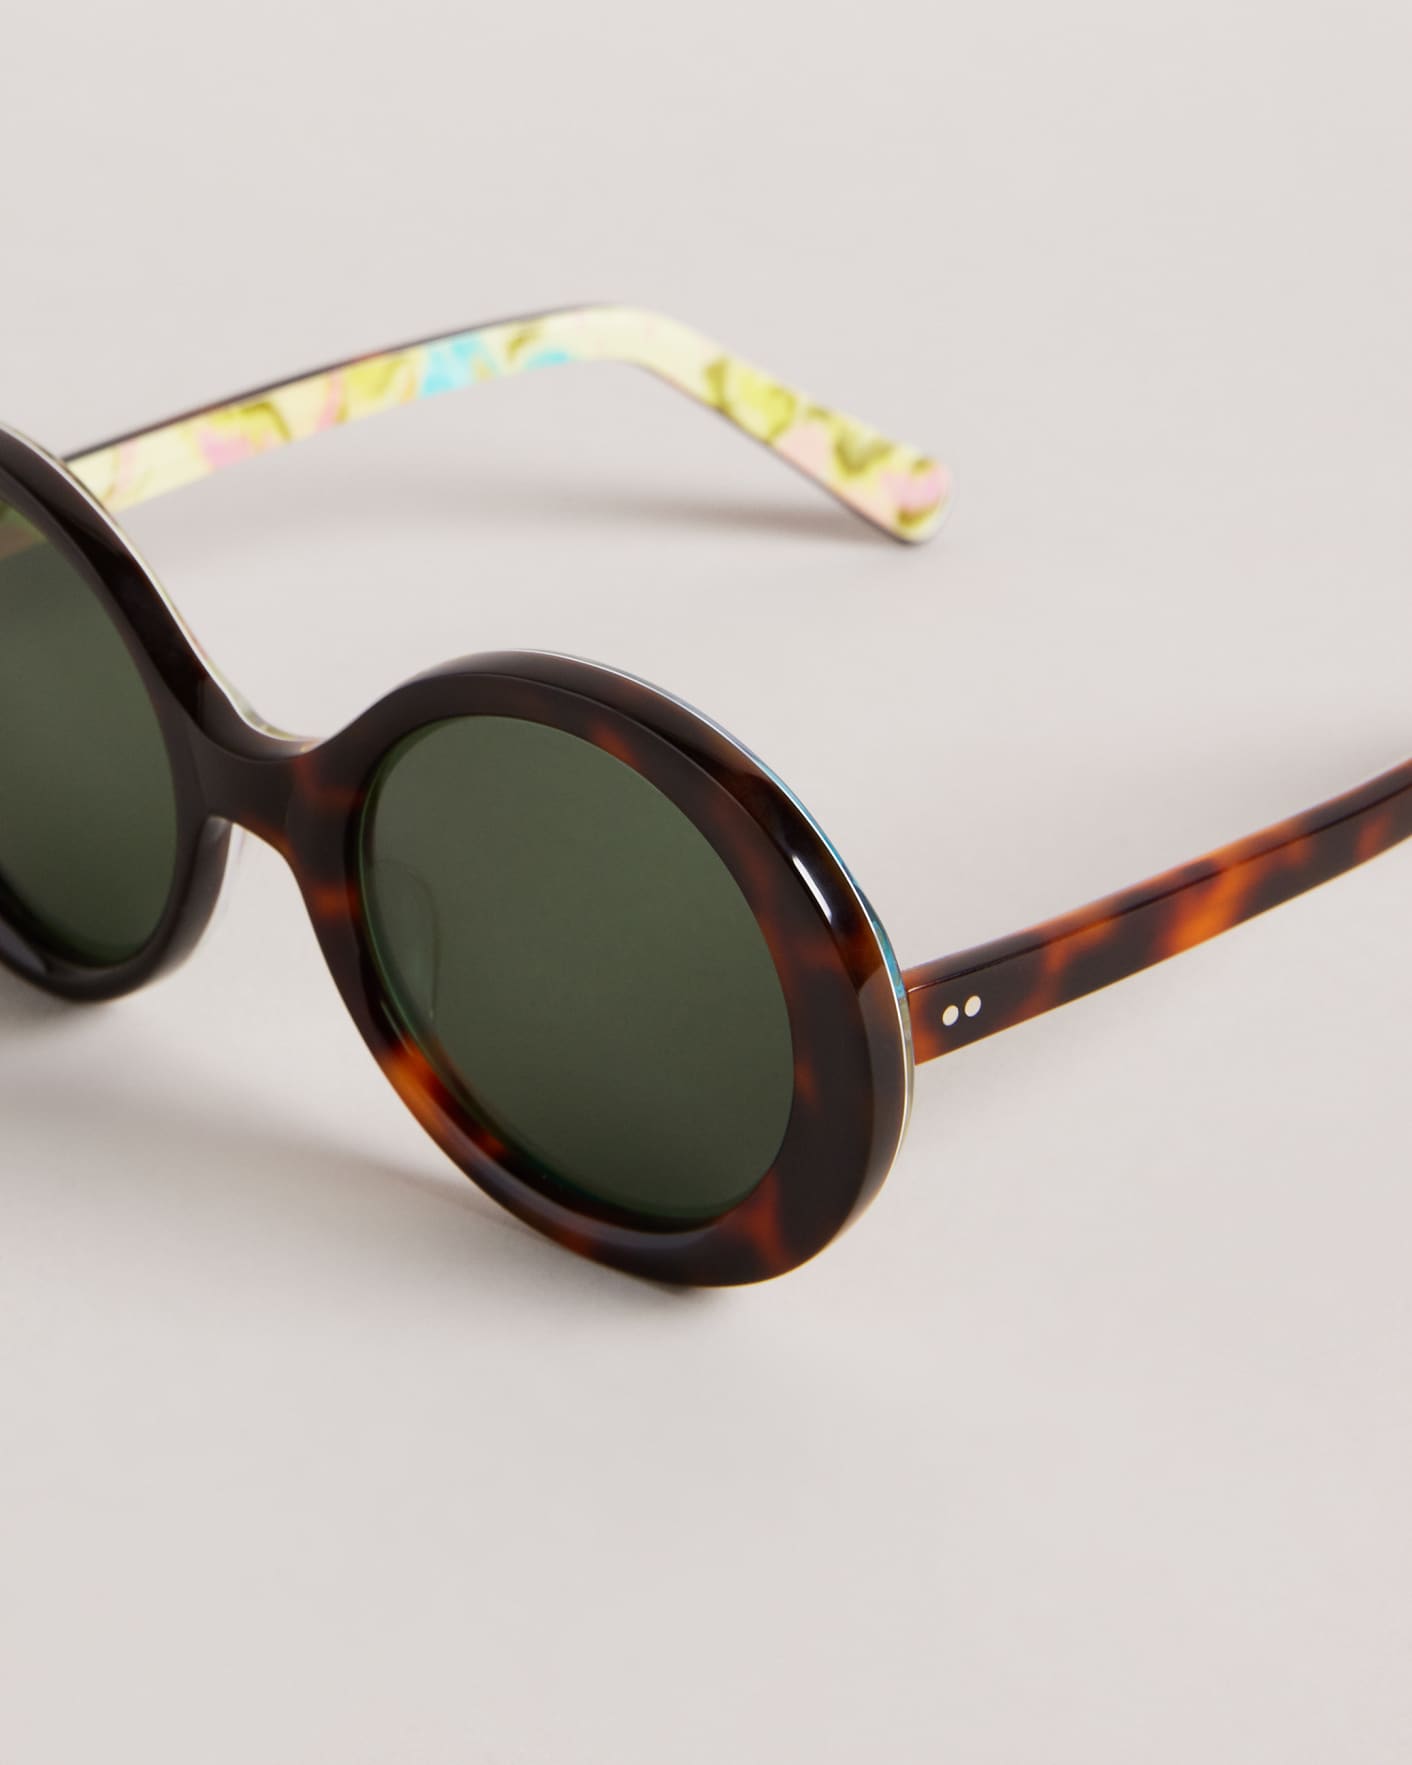 Tortoiseshell MIB 1960's Round Frame Sunglasses Ted Baker